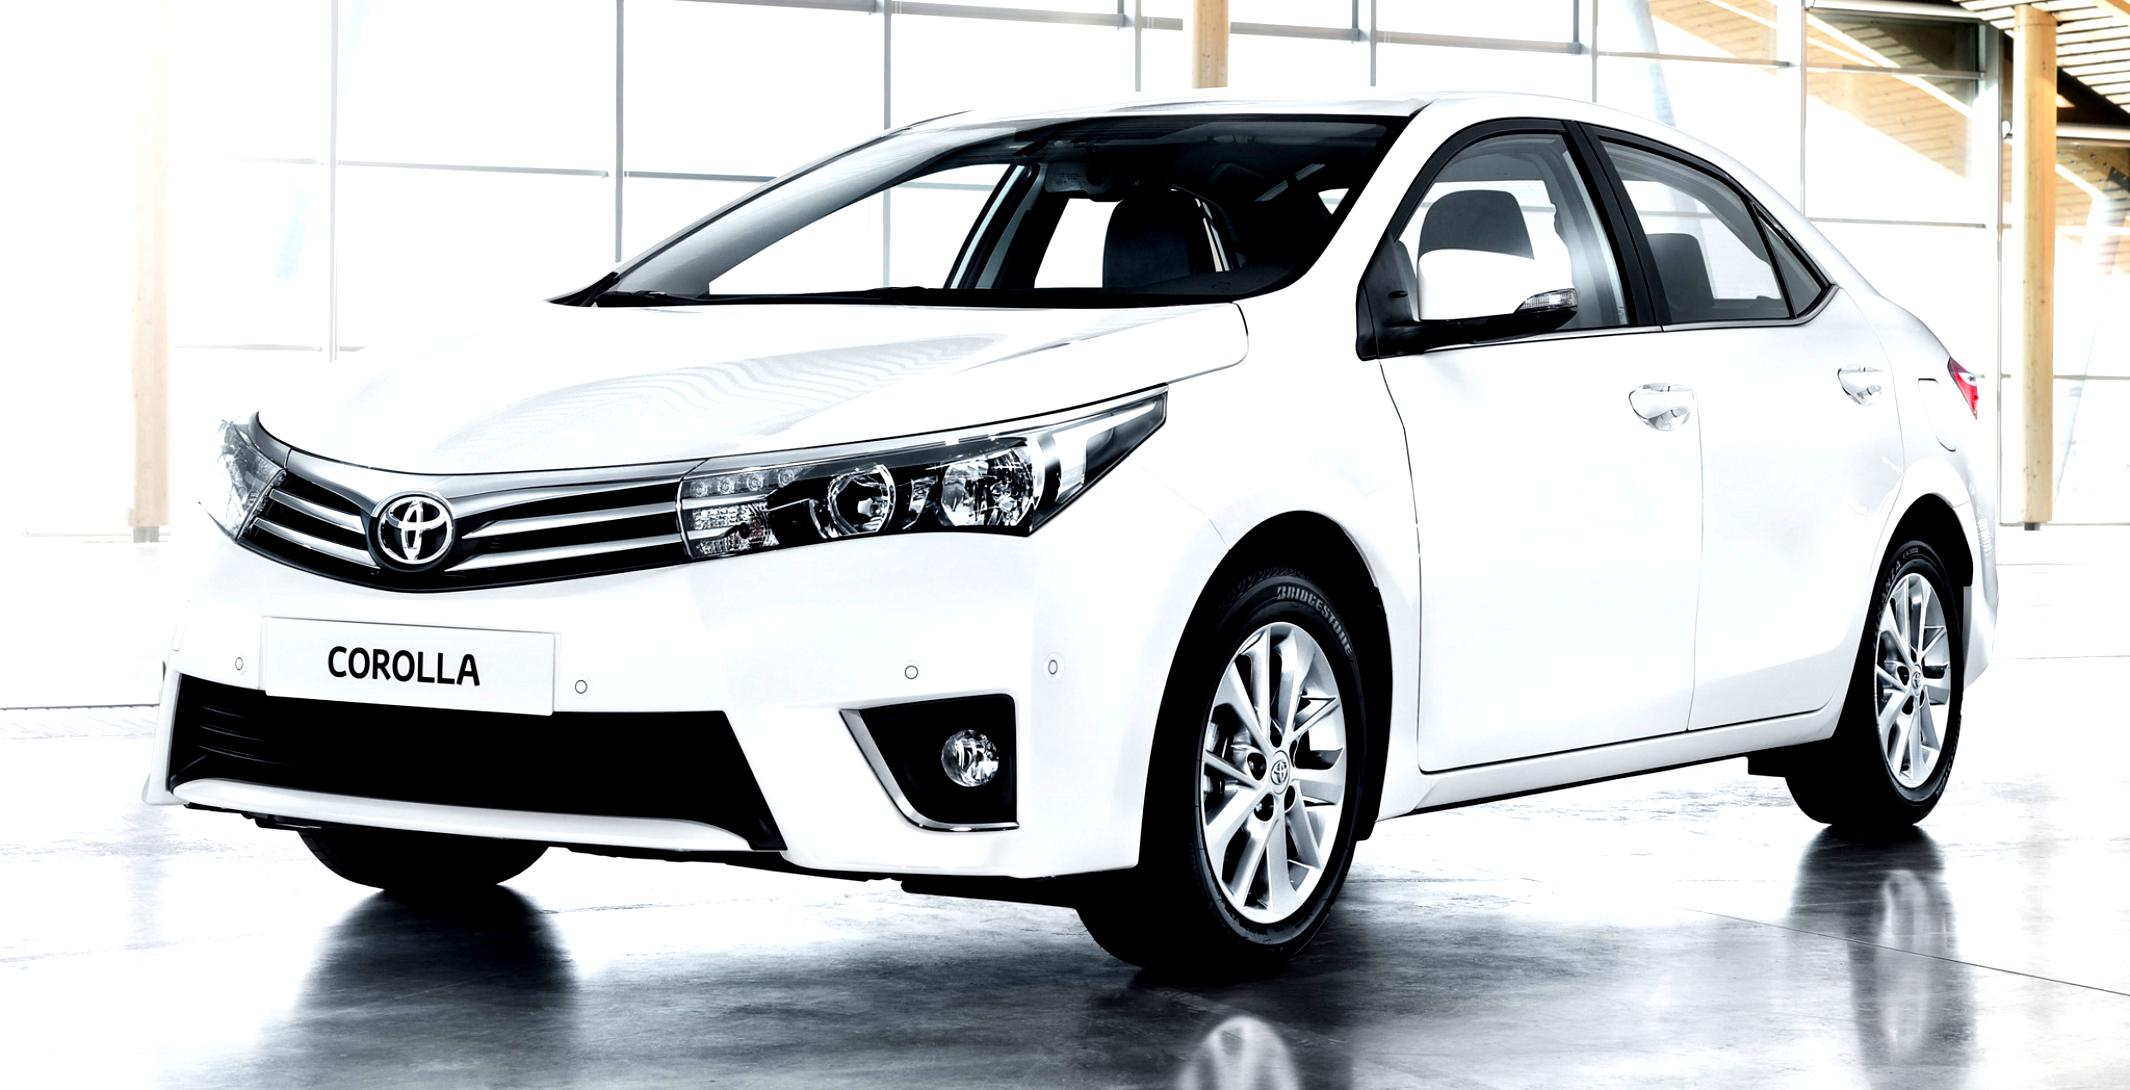 Toyota Corolla Altis 2014 #2